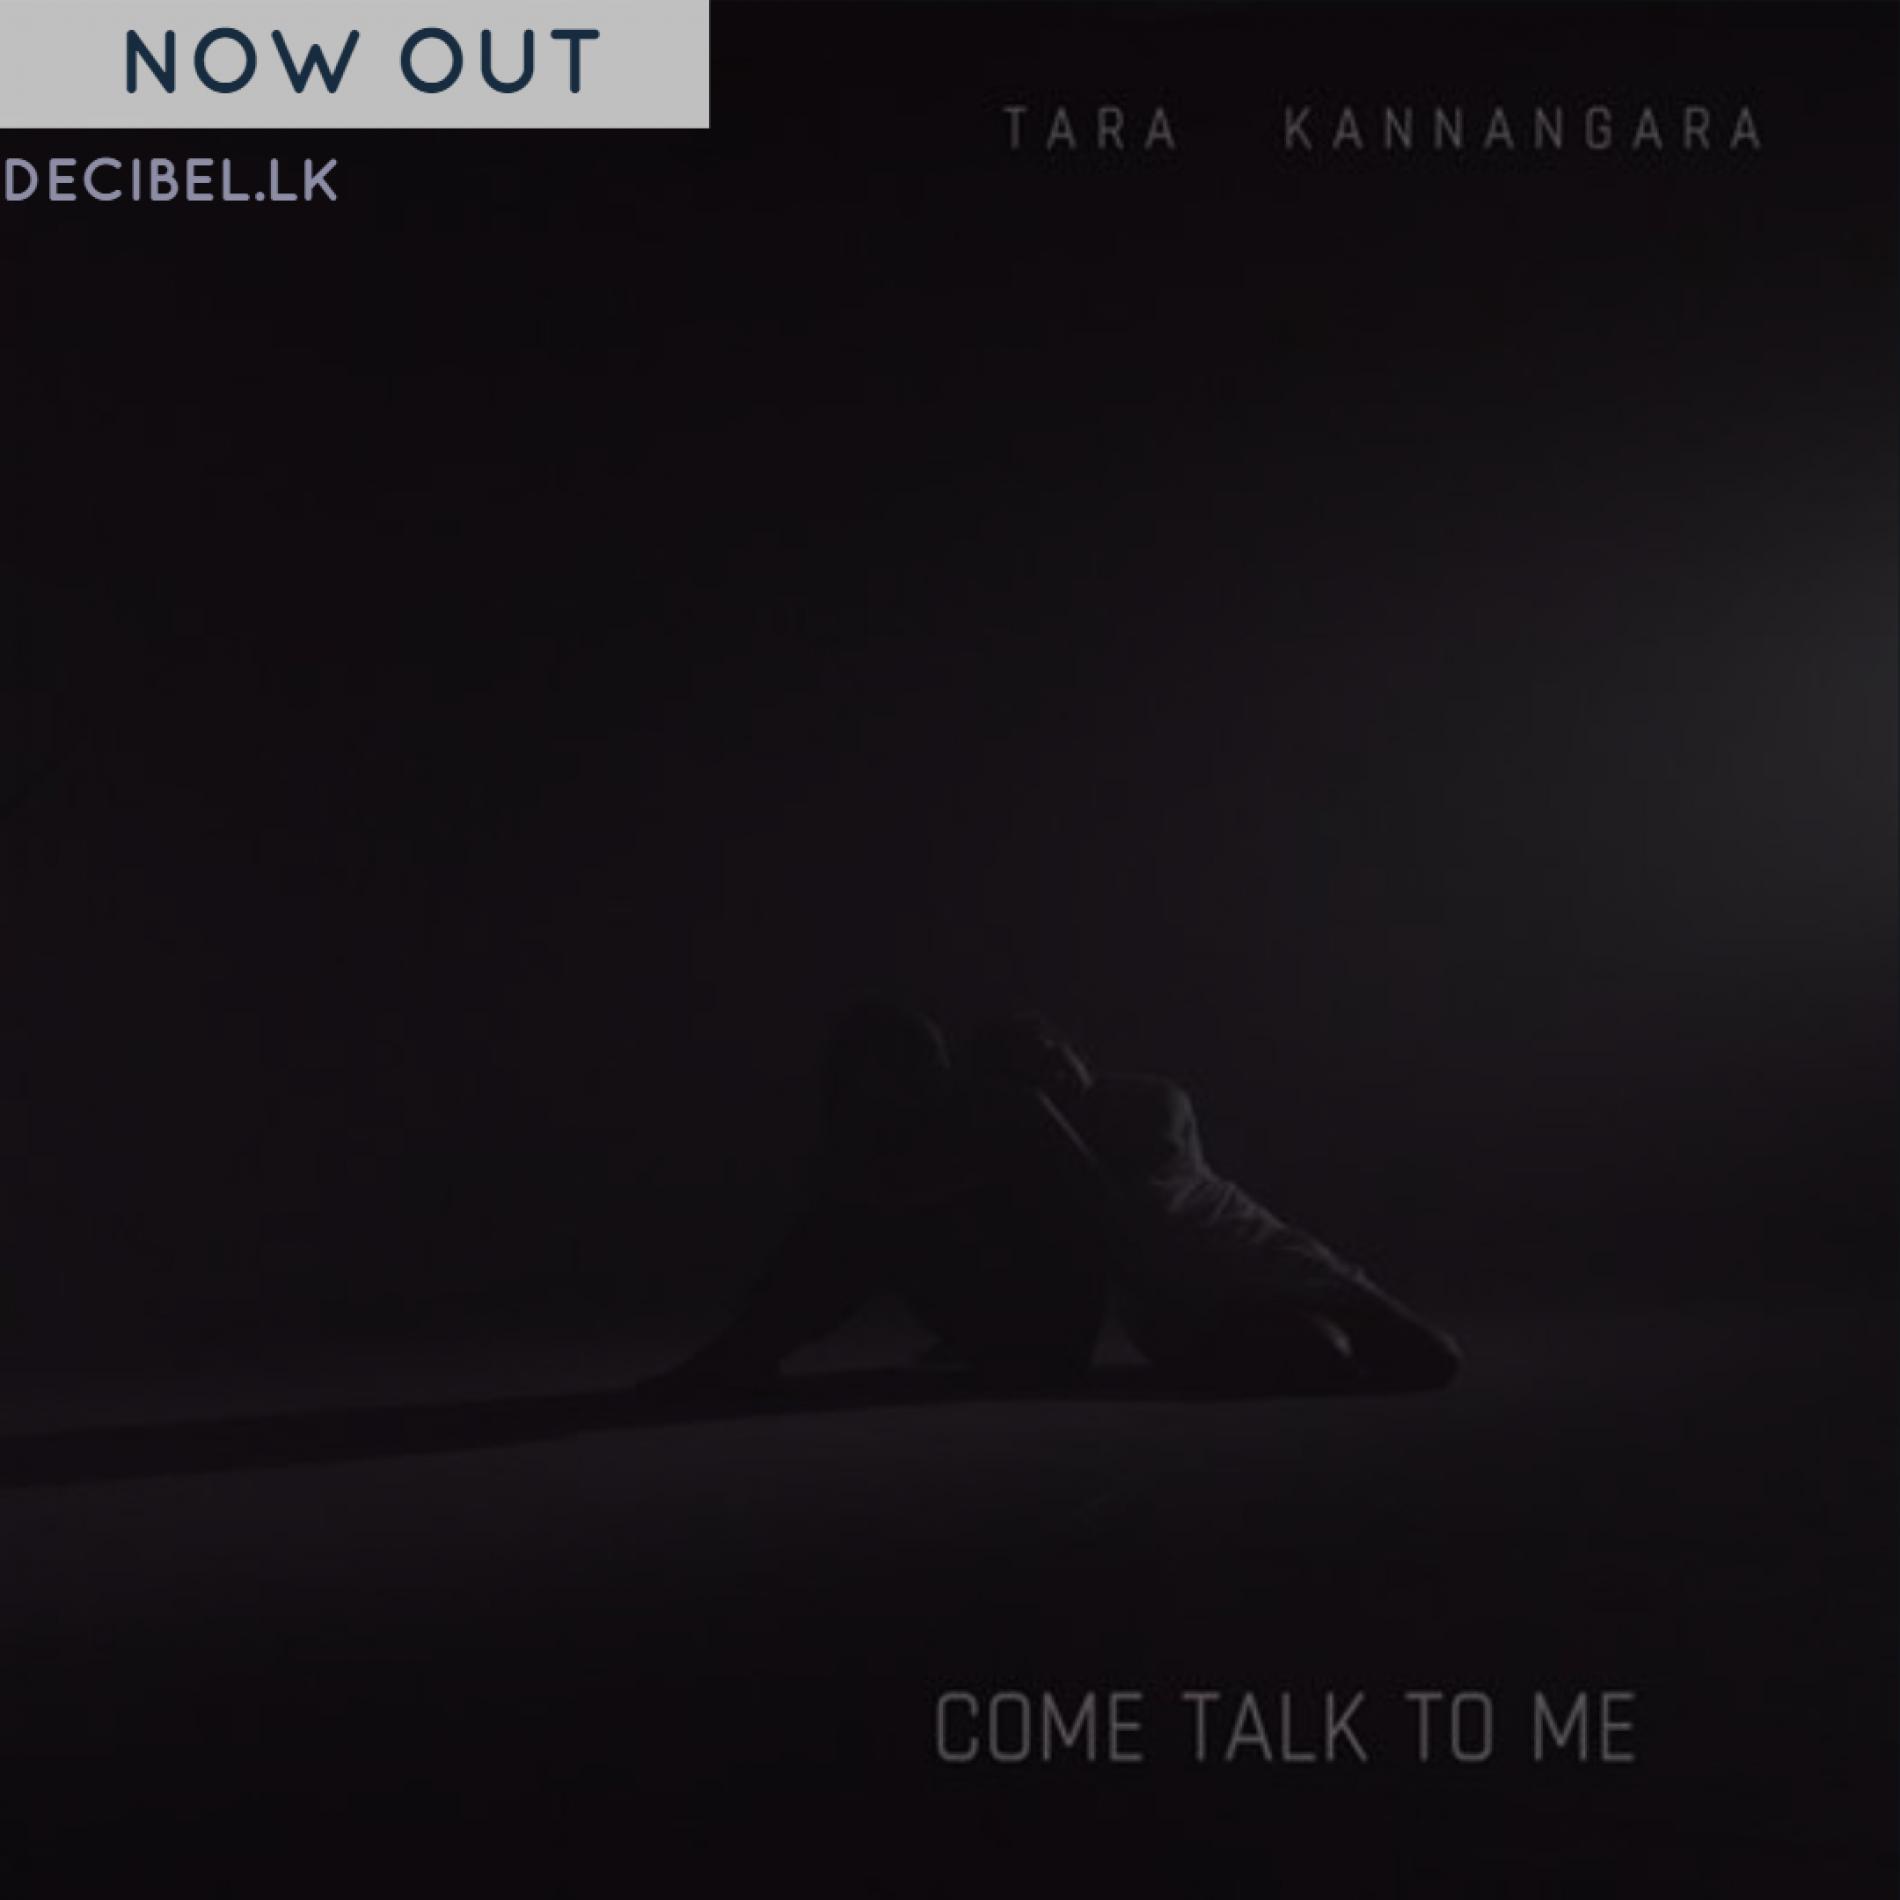 Tara Kannangara – Come Talk To Me (Peter Gabriel Cover)